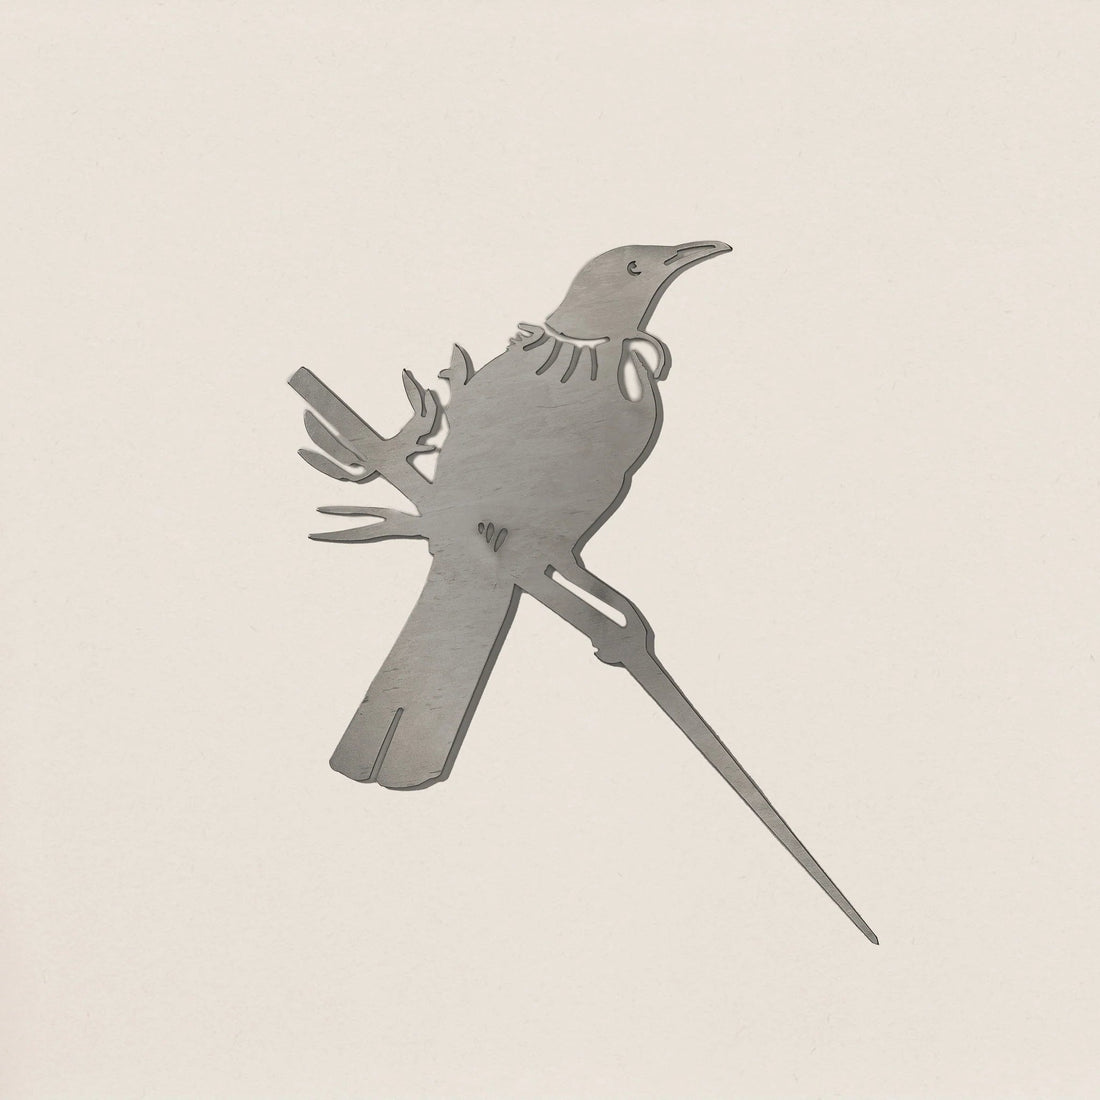 Metalbird - Tūī - The Flower Crate